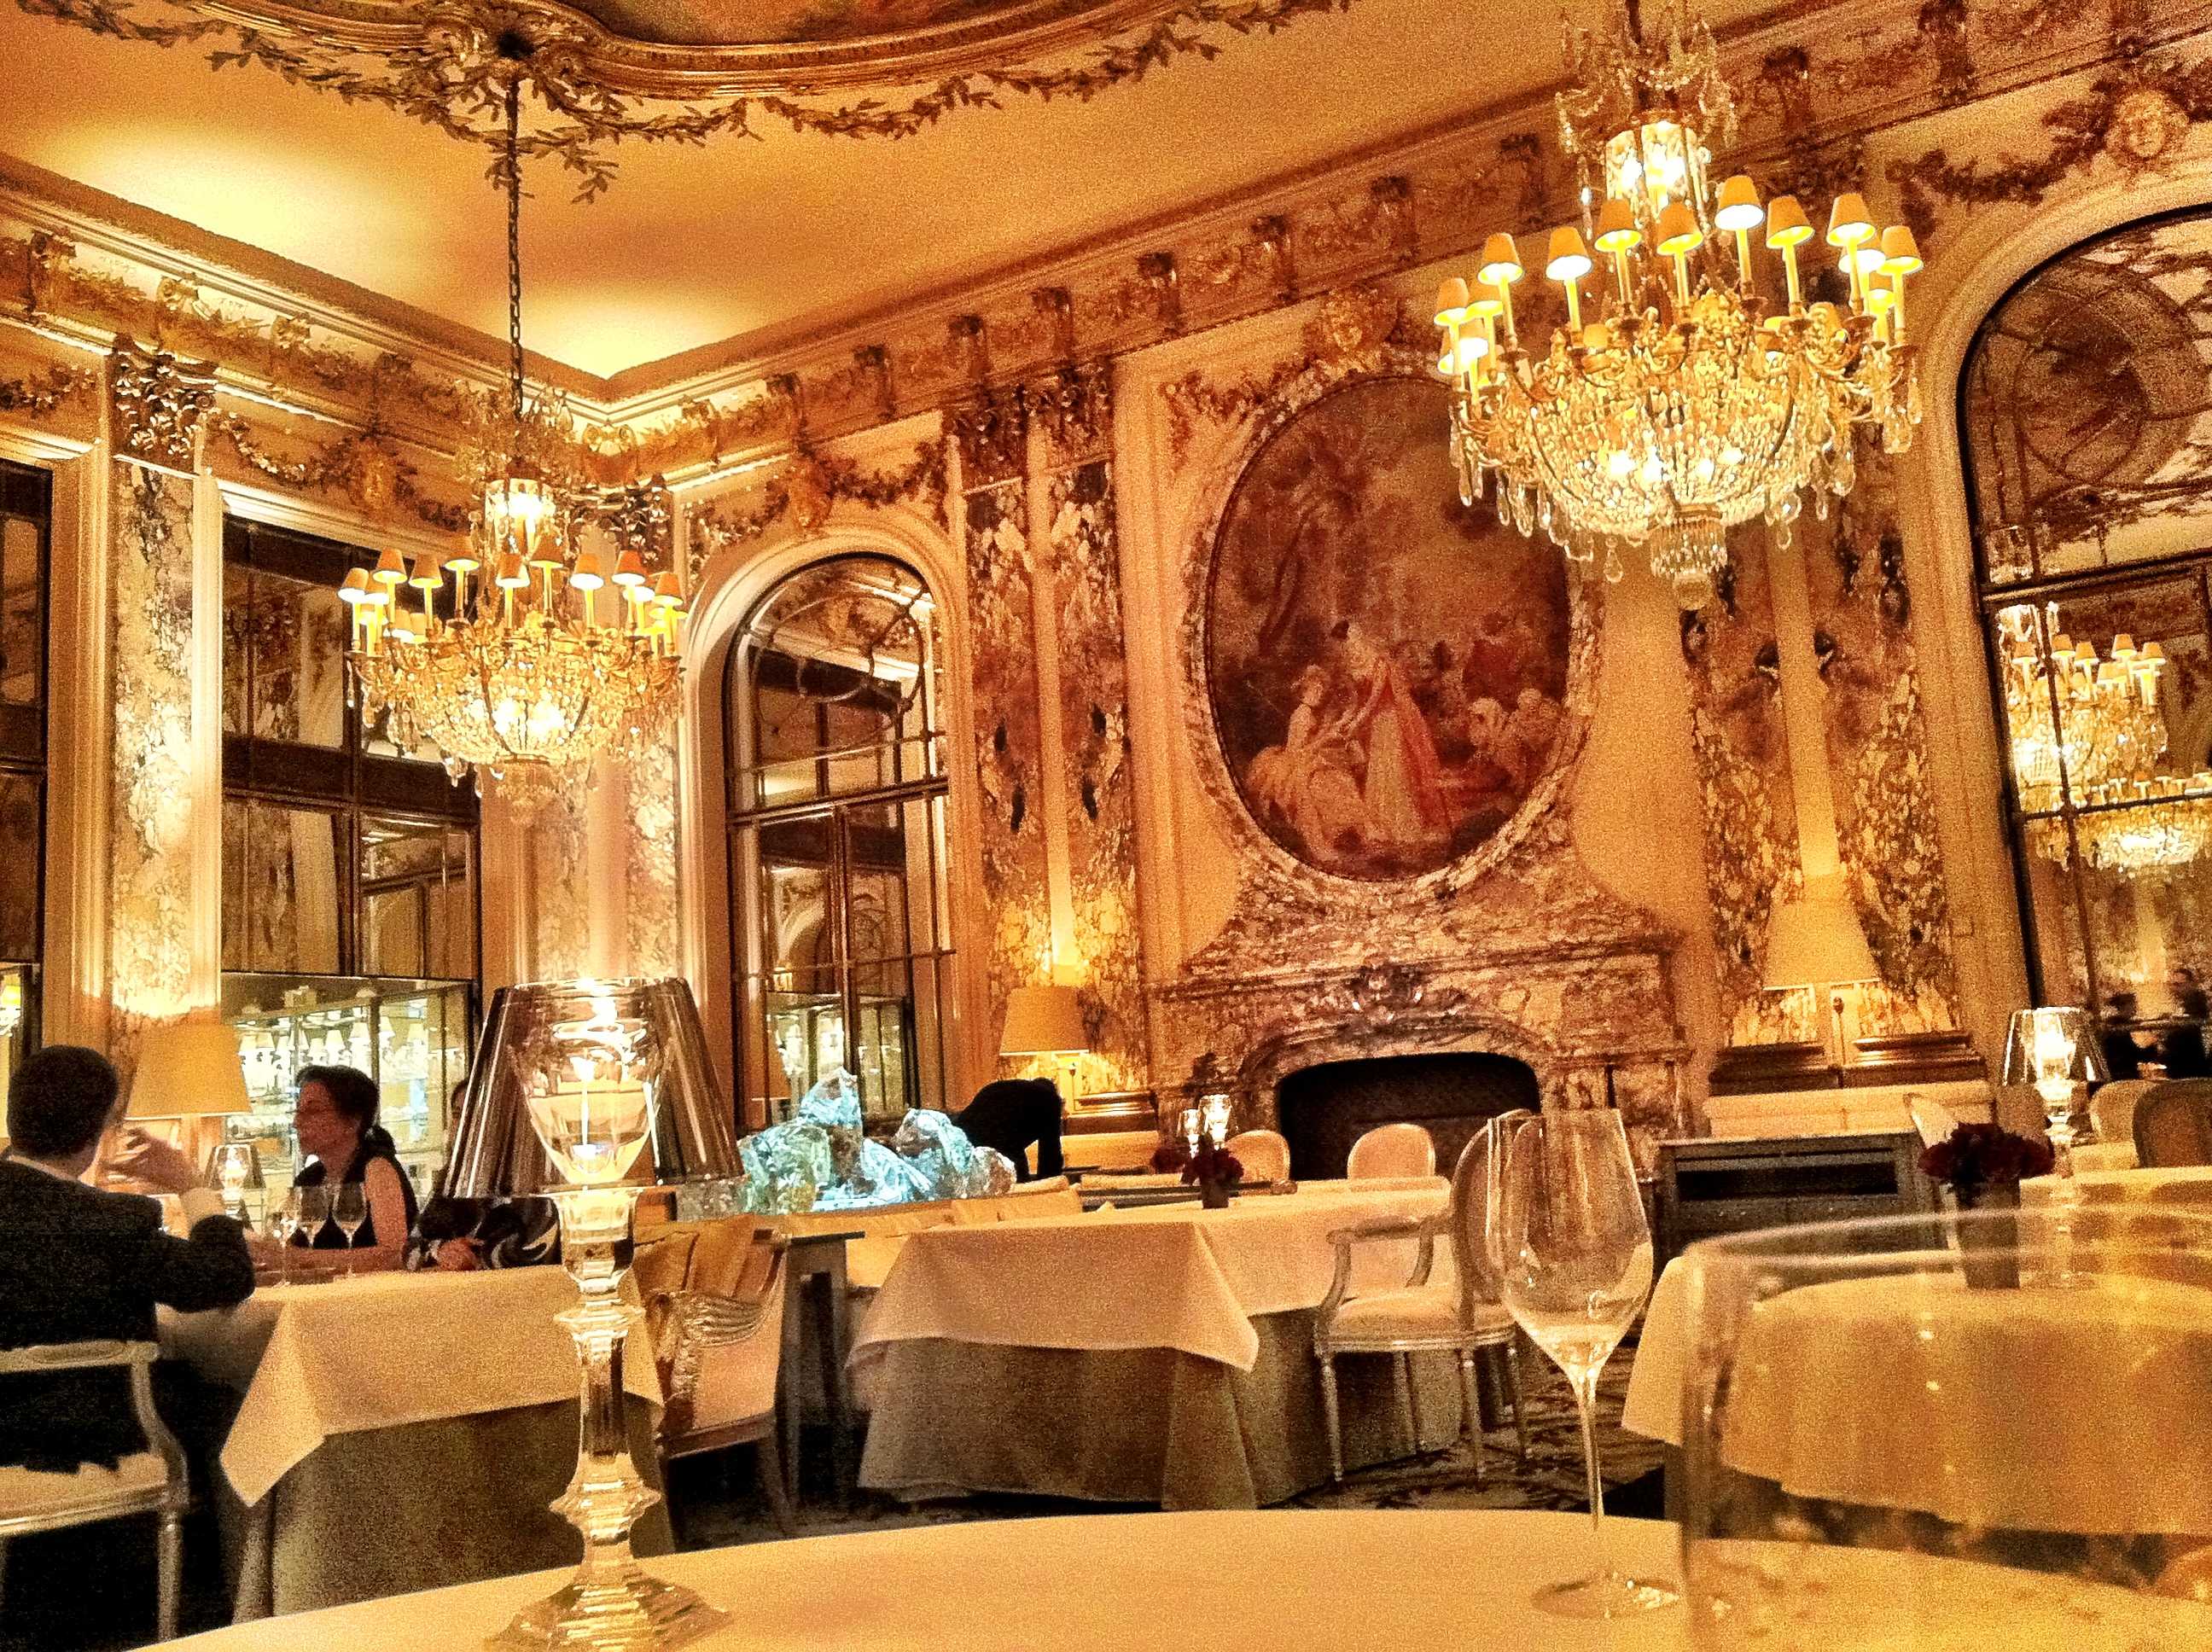 Название дорогих ресторанов. Ресторан le Meurice Париж. Отель le Meurice Париж 20 век. Epicure ресторан в Париже.